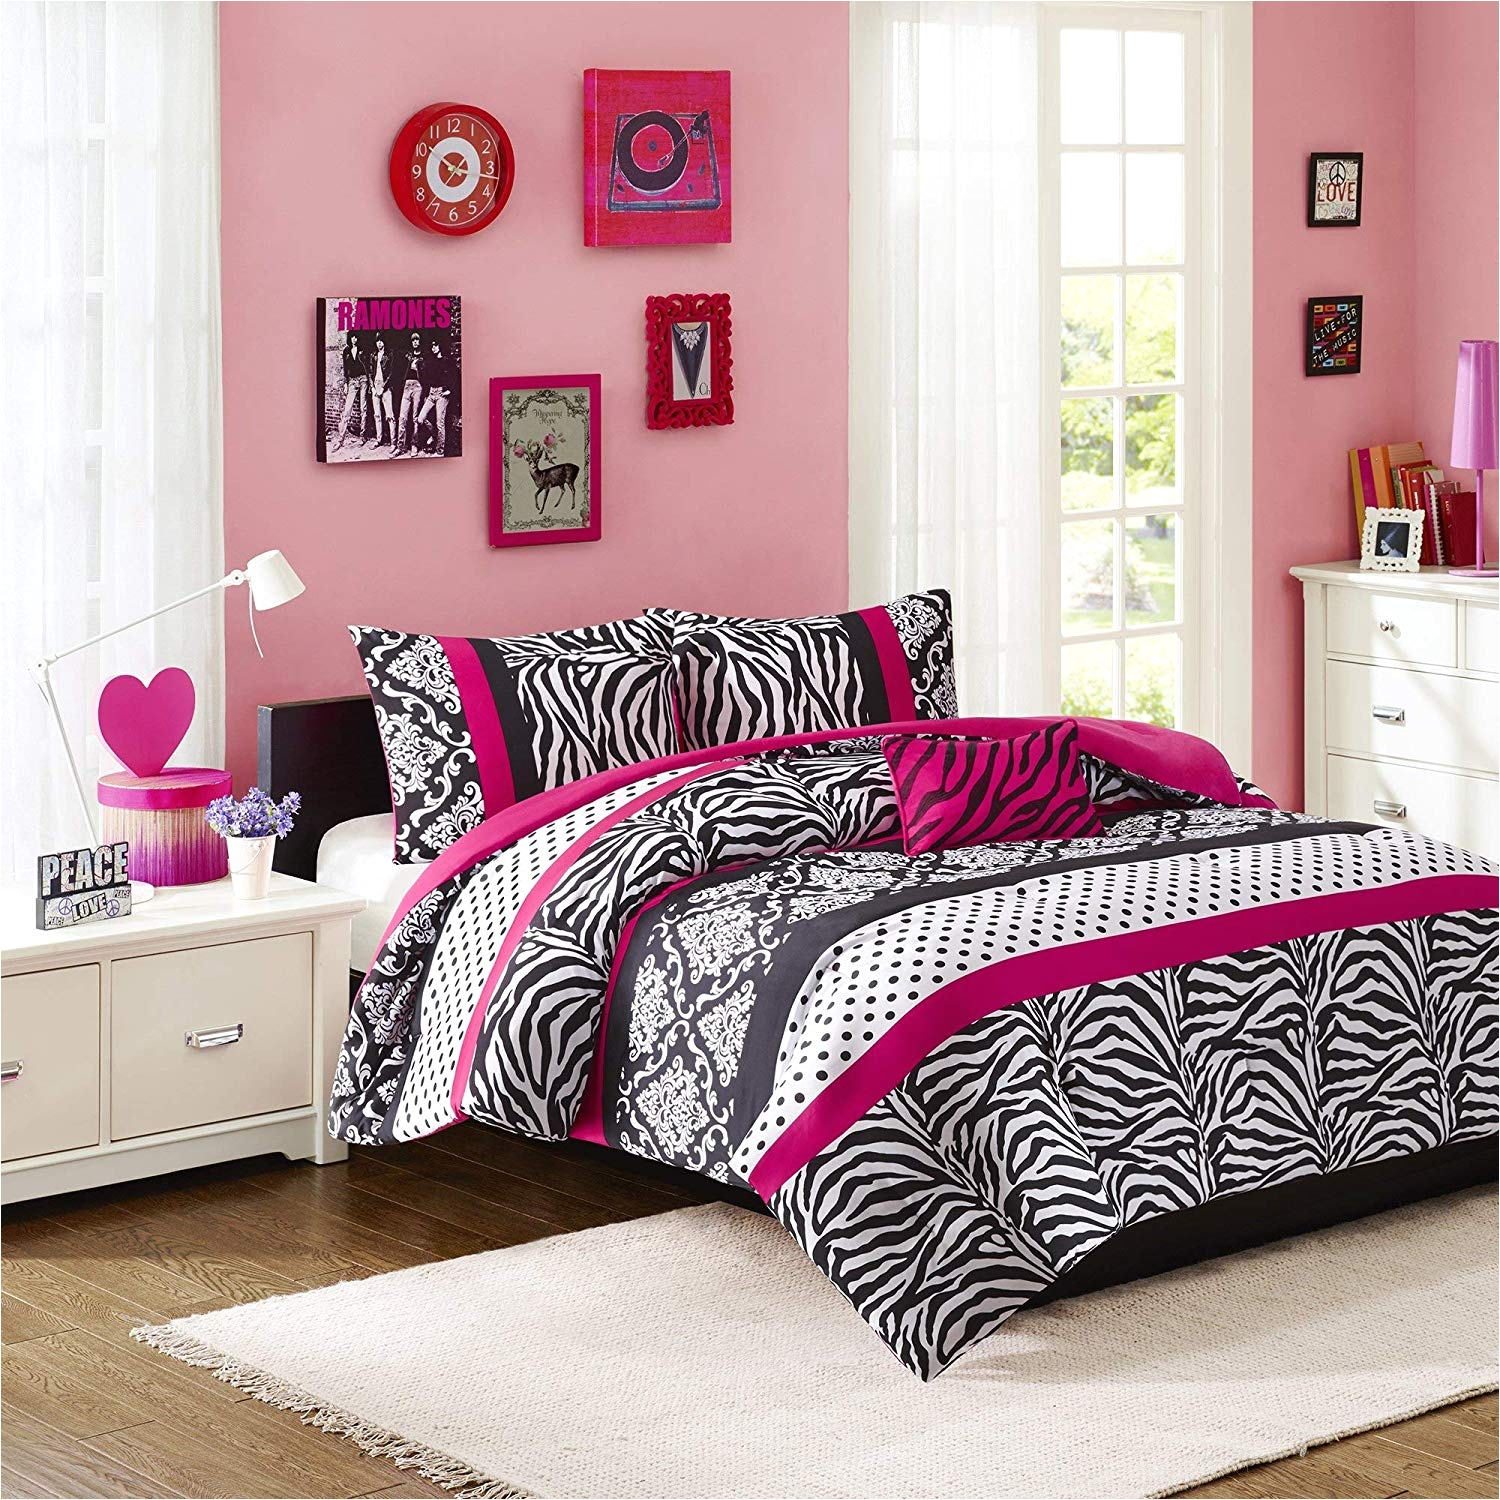 amazon com mi zone reagan comforter set full queen size pink zebra polka dot 4 piece bed sets ultra soft microfiber teen bedding girls bedroom home